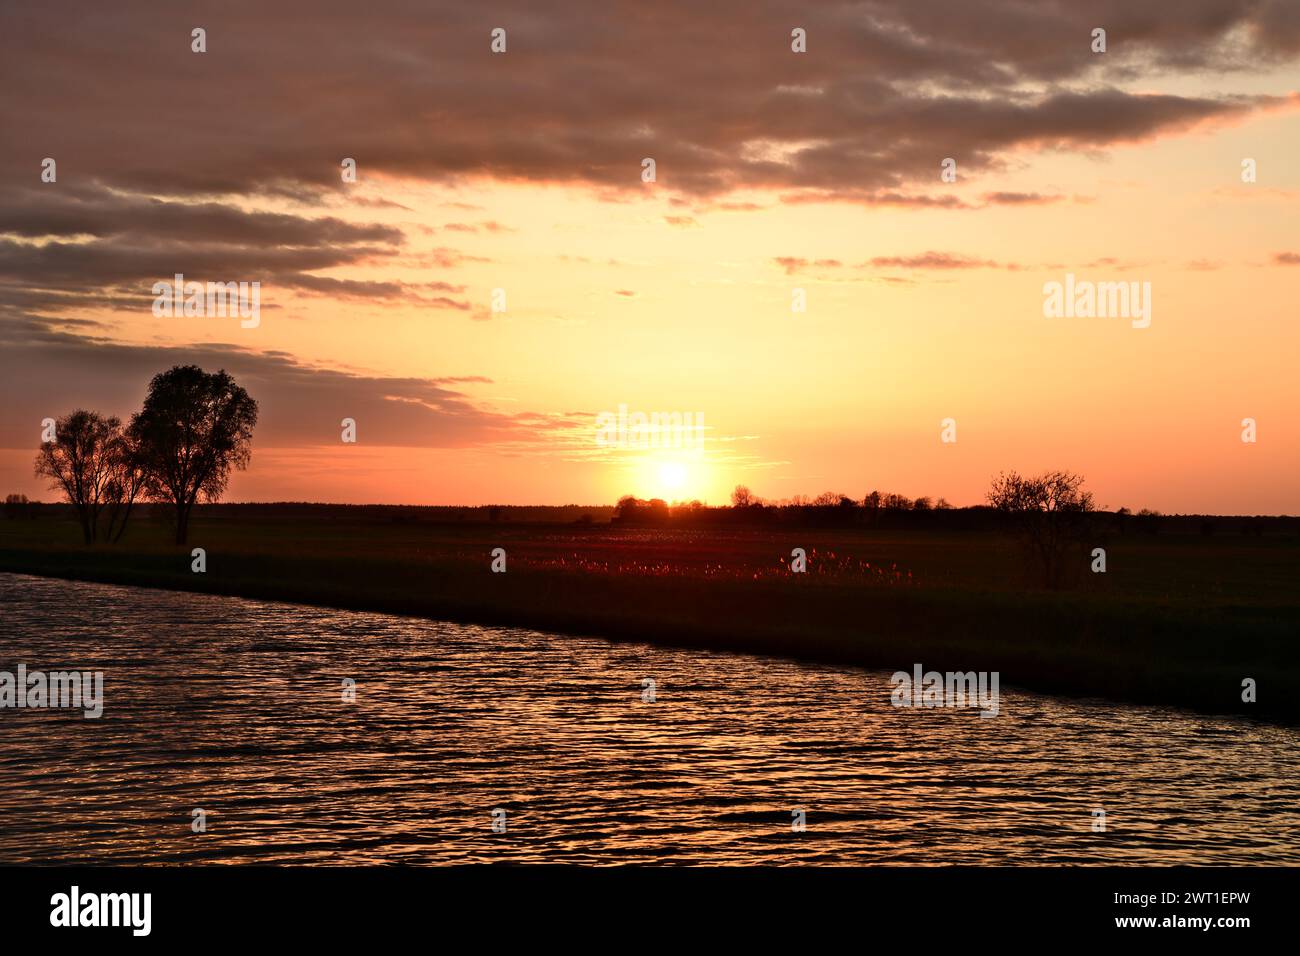 Sonnenuntergang am Kanal Stock Photo